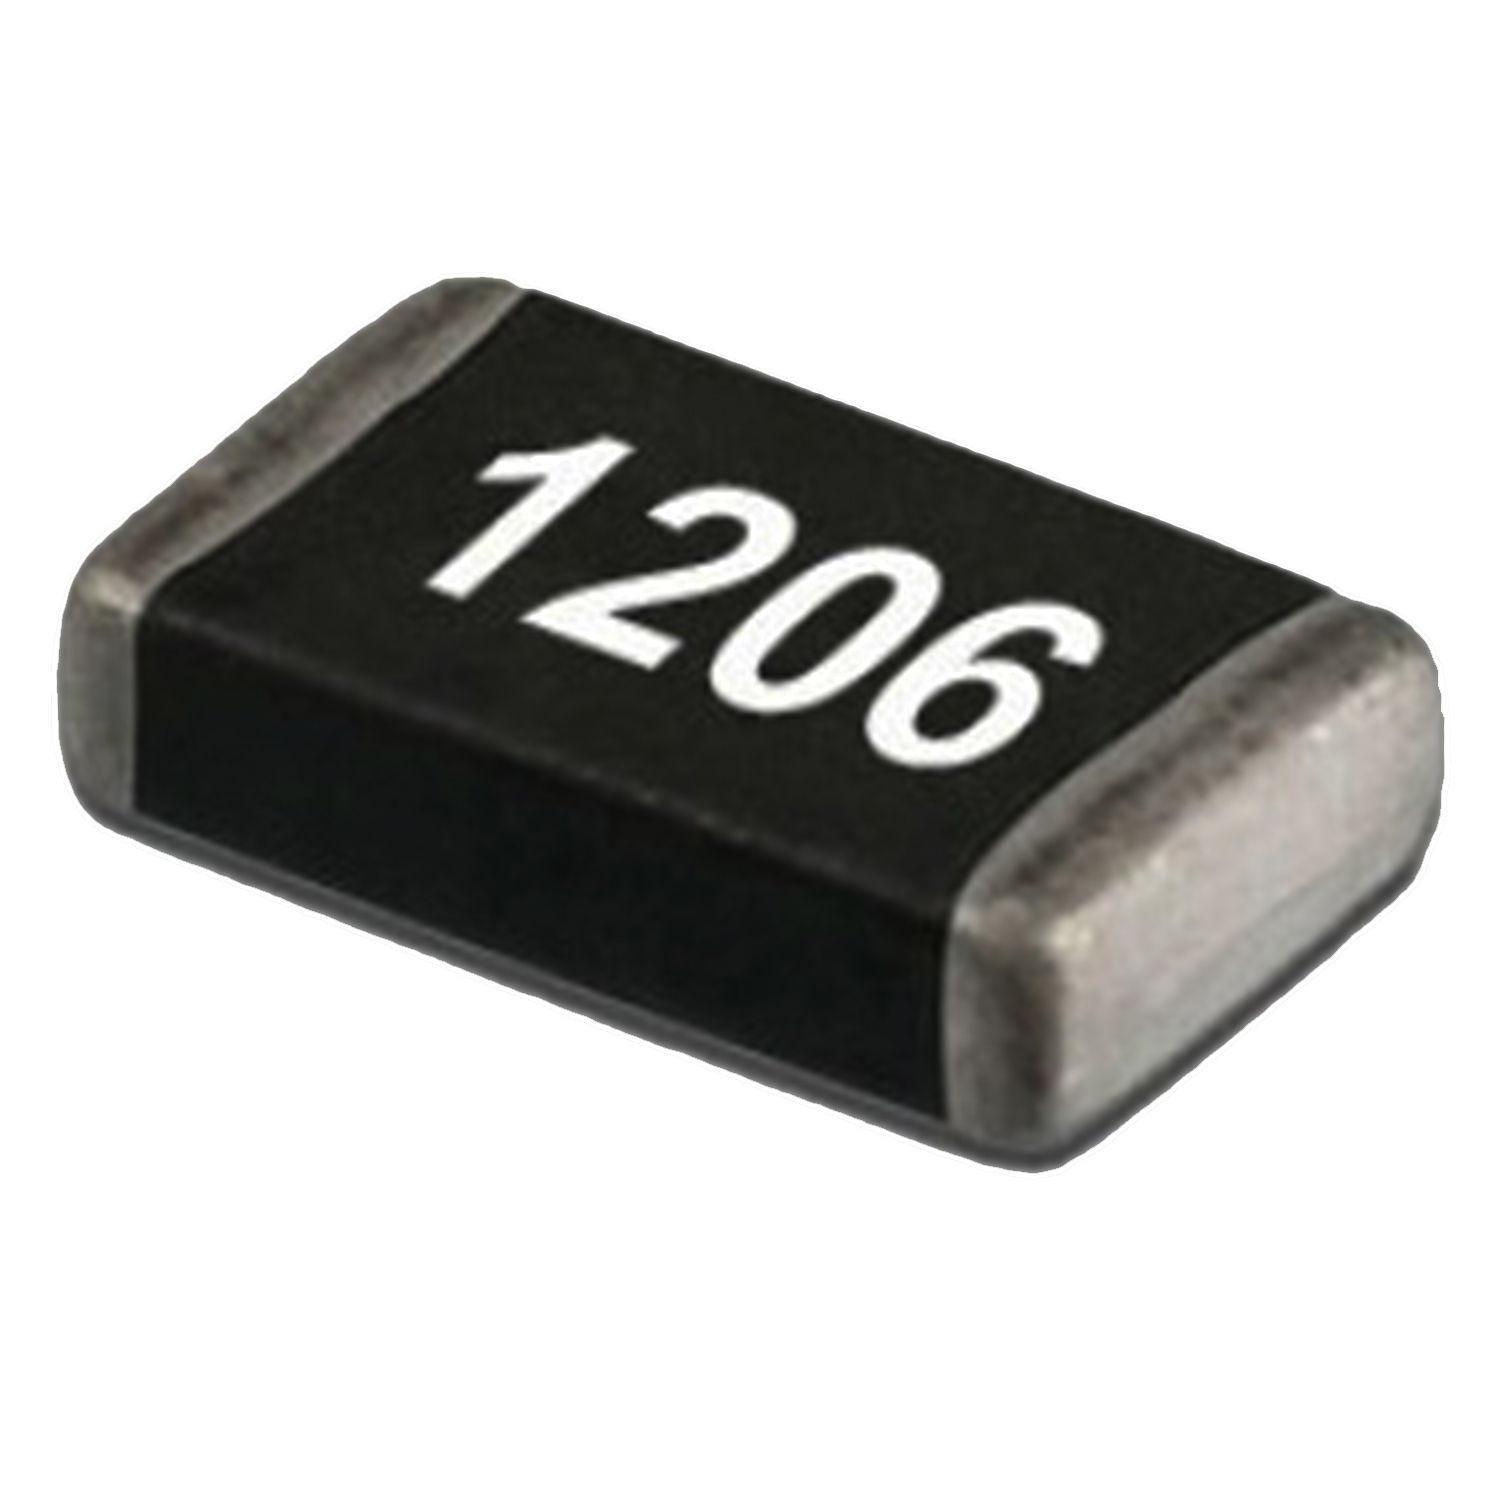 SMD Резистор 1206 0.25 Вт 220 Ом 10 шт.